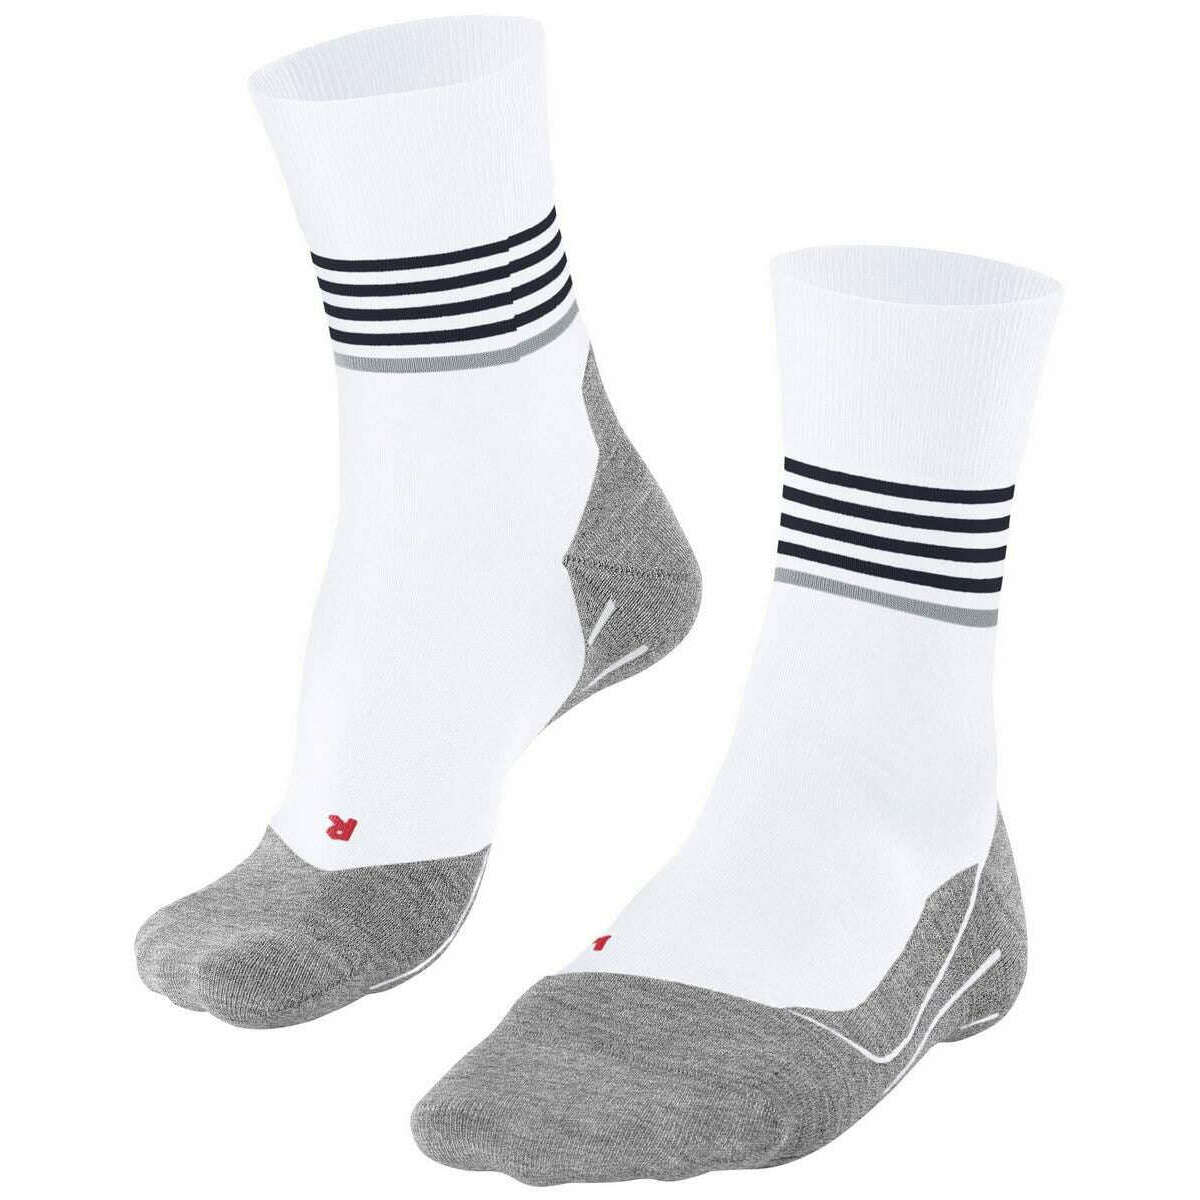 Falke RU4 Endurance Reflect Socks - White